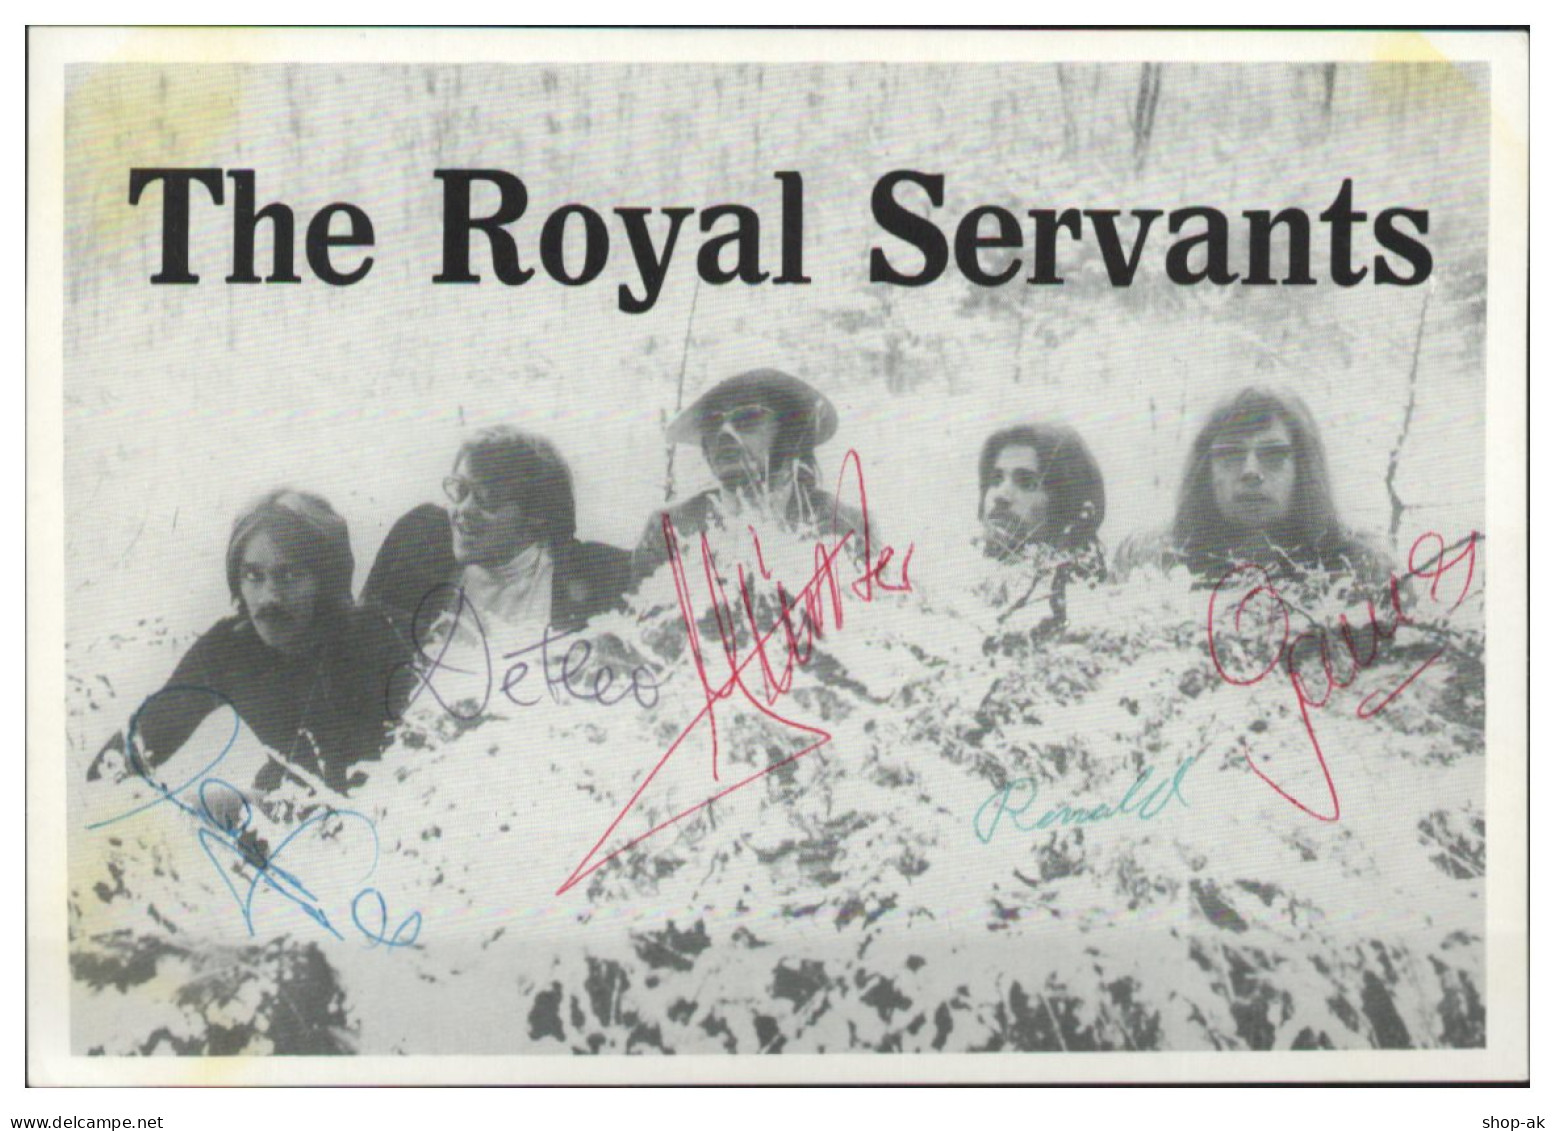 V6284/ The Royal Servants Beat- Popband Autogramm Autogrammkarte 60er Jahre - Autographes